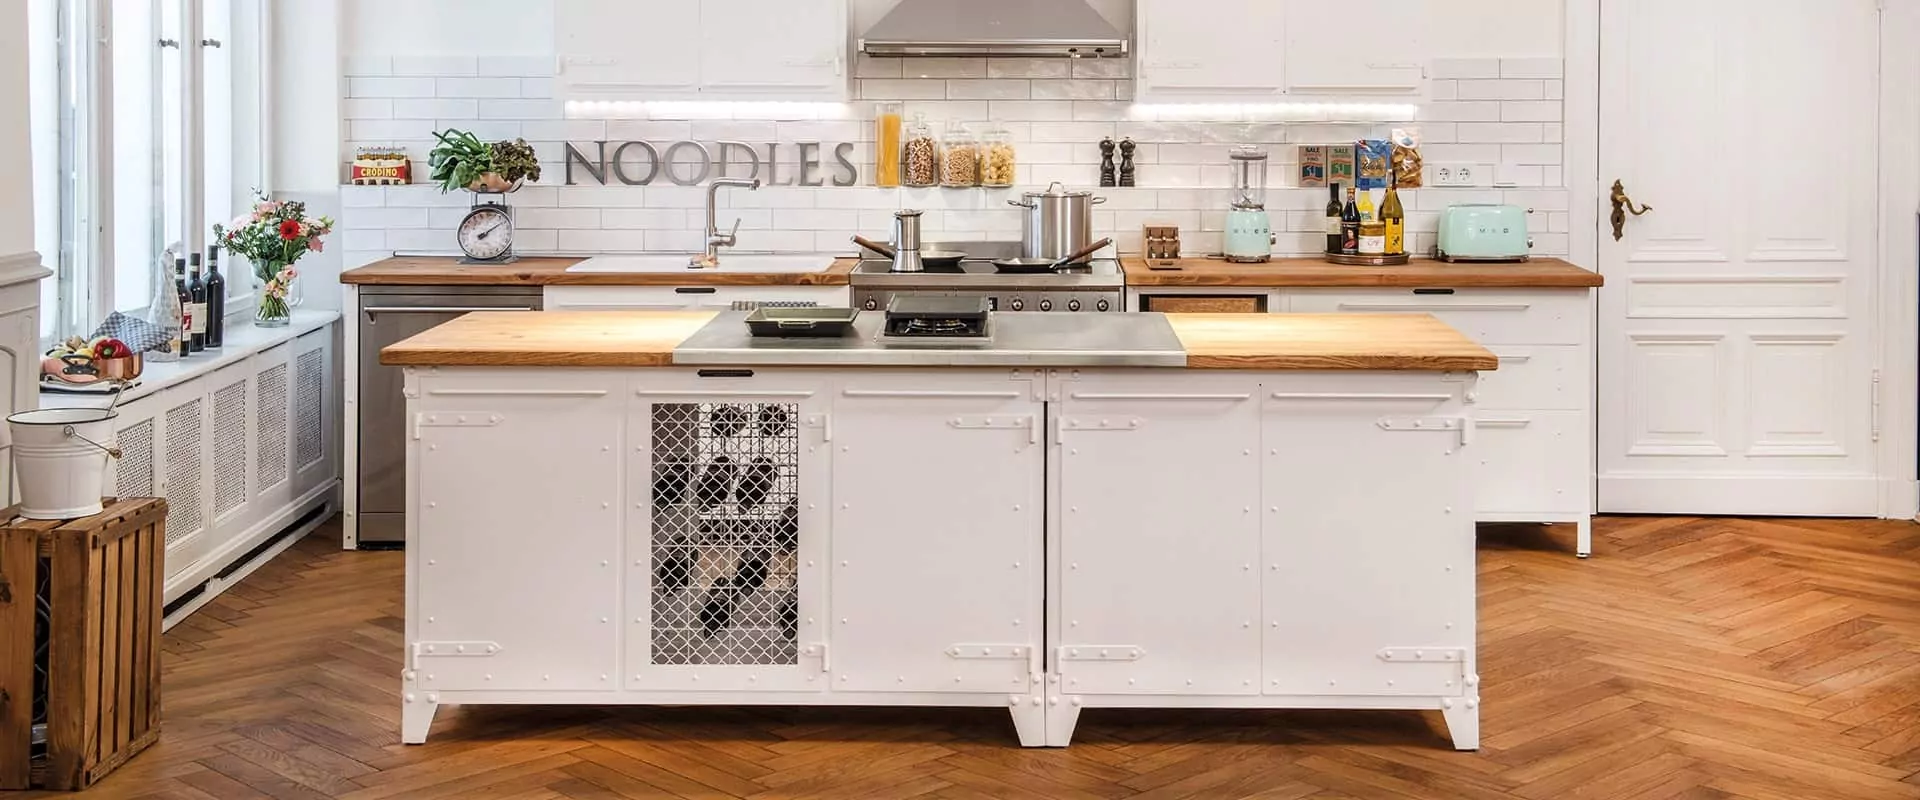 Industrial Design Möbel aus Berlin kaufen   Noodles